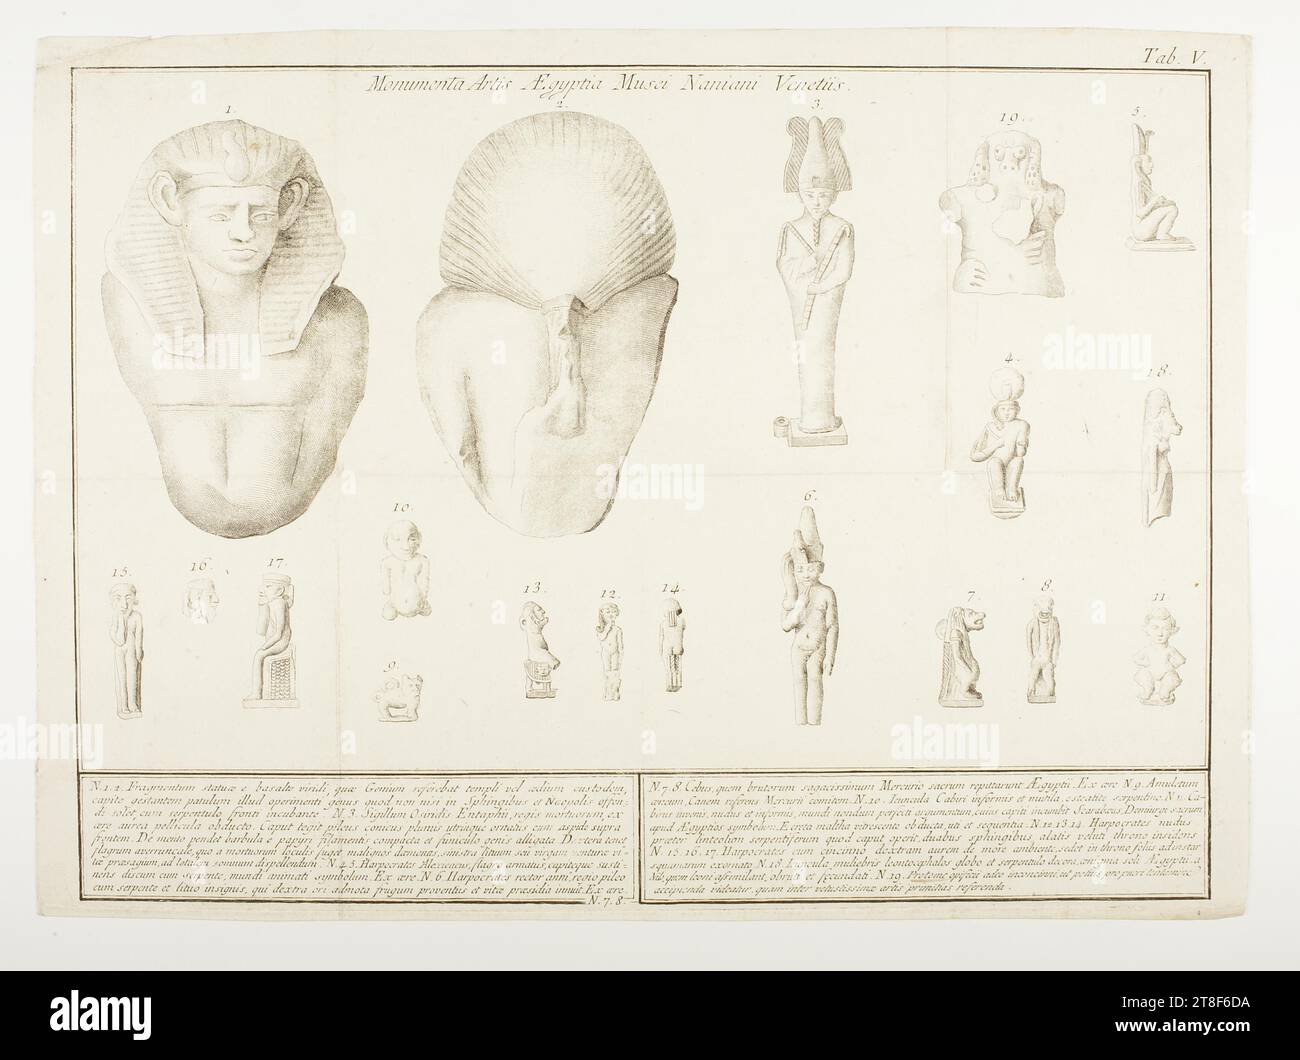 Monumenta Artis Ægyptiæ in Musæo Naniano Veneteiis Tab.V, 1791 - 1794, Graphic Art, Copper Engraving, Paper, Color, Printer's ink, Copper engraving, Printet, Height (paper size) 285 mm, Width (paper size) 385 mm, Tab.V, Monumenta Artis Ægyptiæ in Musæo Naniano Veneteiis, 1., 2., 3., 19., 5., 4., 18., 15., 16., 17., 10., 9., 13., 12., 14., 6., 7., 8., 11., N.1.2. Fragmentum statuæ e basate viridi, quæ Genium referebat templi vel ædium custodem, [...], N.3. Sigillum Osiridis Entaphii, regis mortuorum, [...], N.4.5. Harpocrates Alexicancus [...], N.6 Harpocrates rector anni, [...] Stock Photo